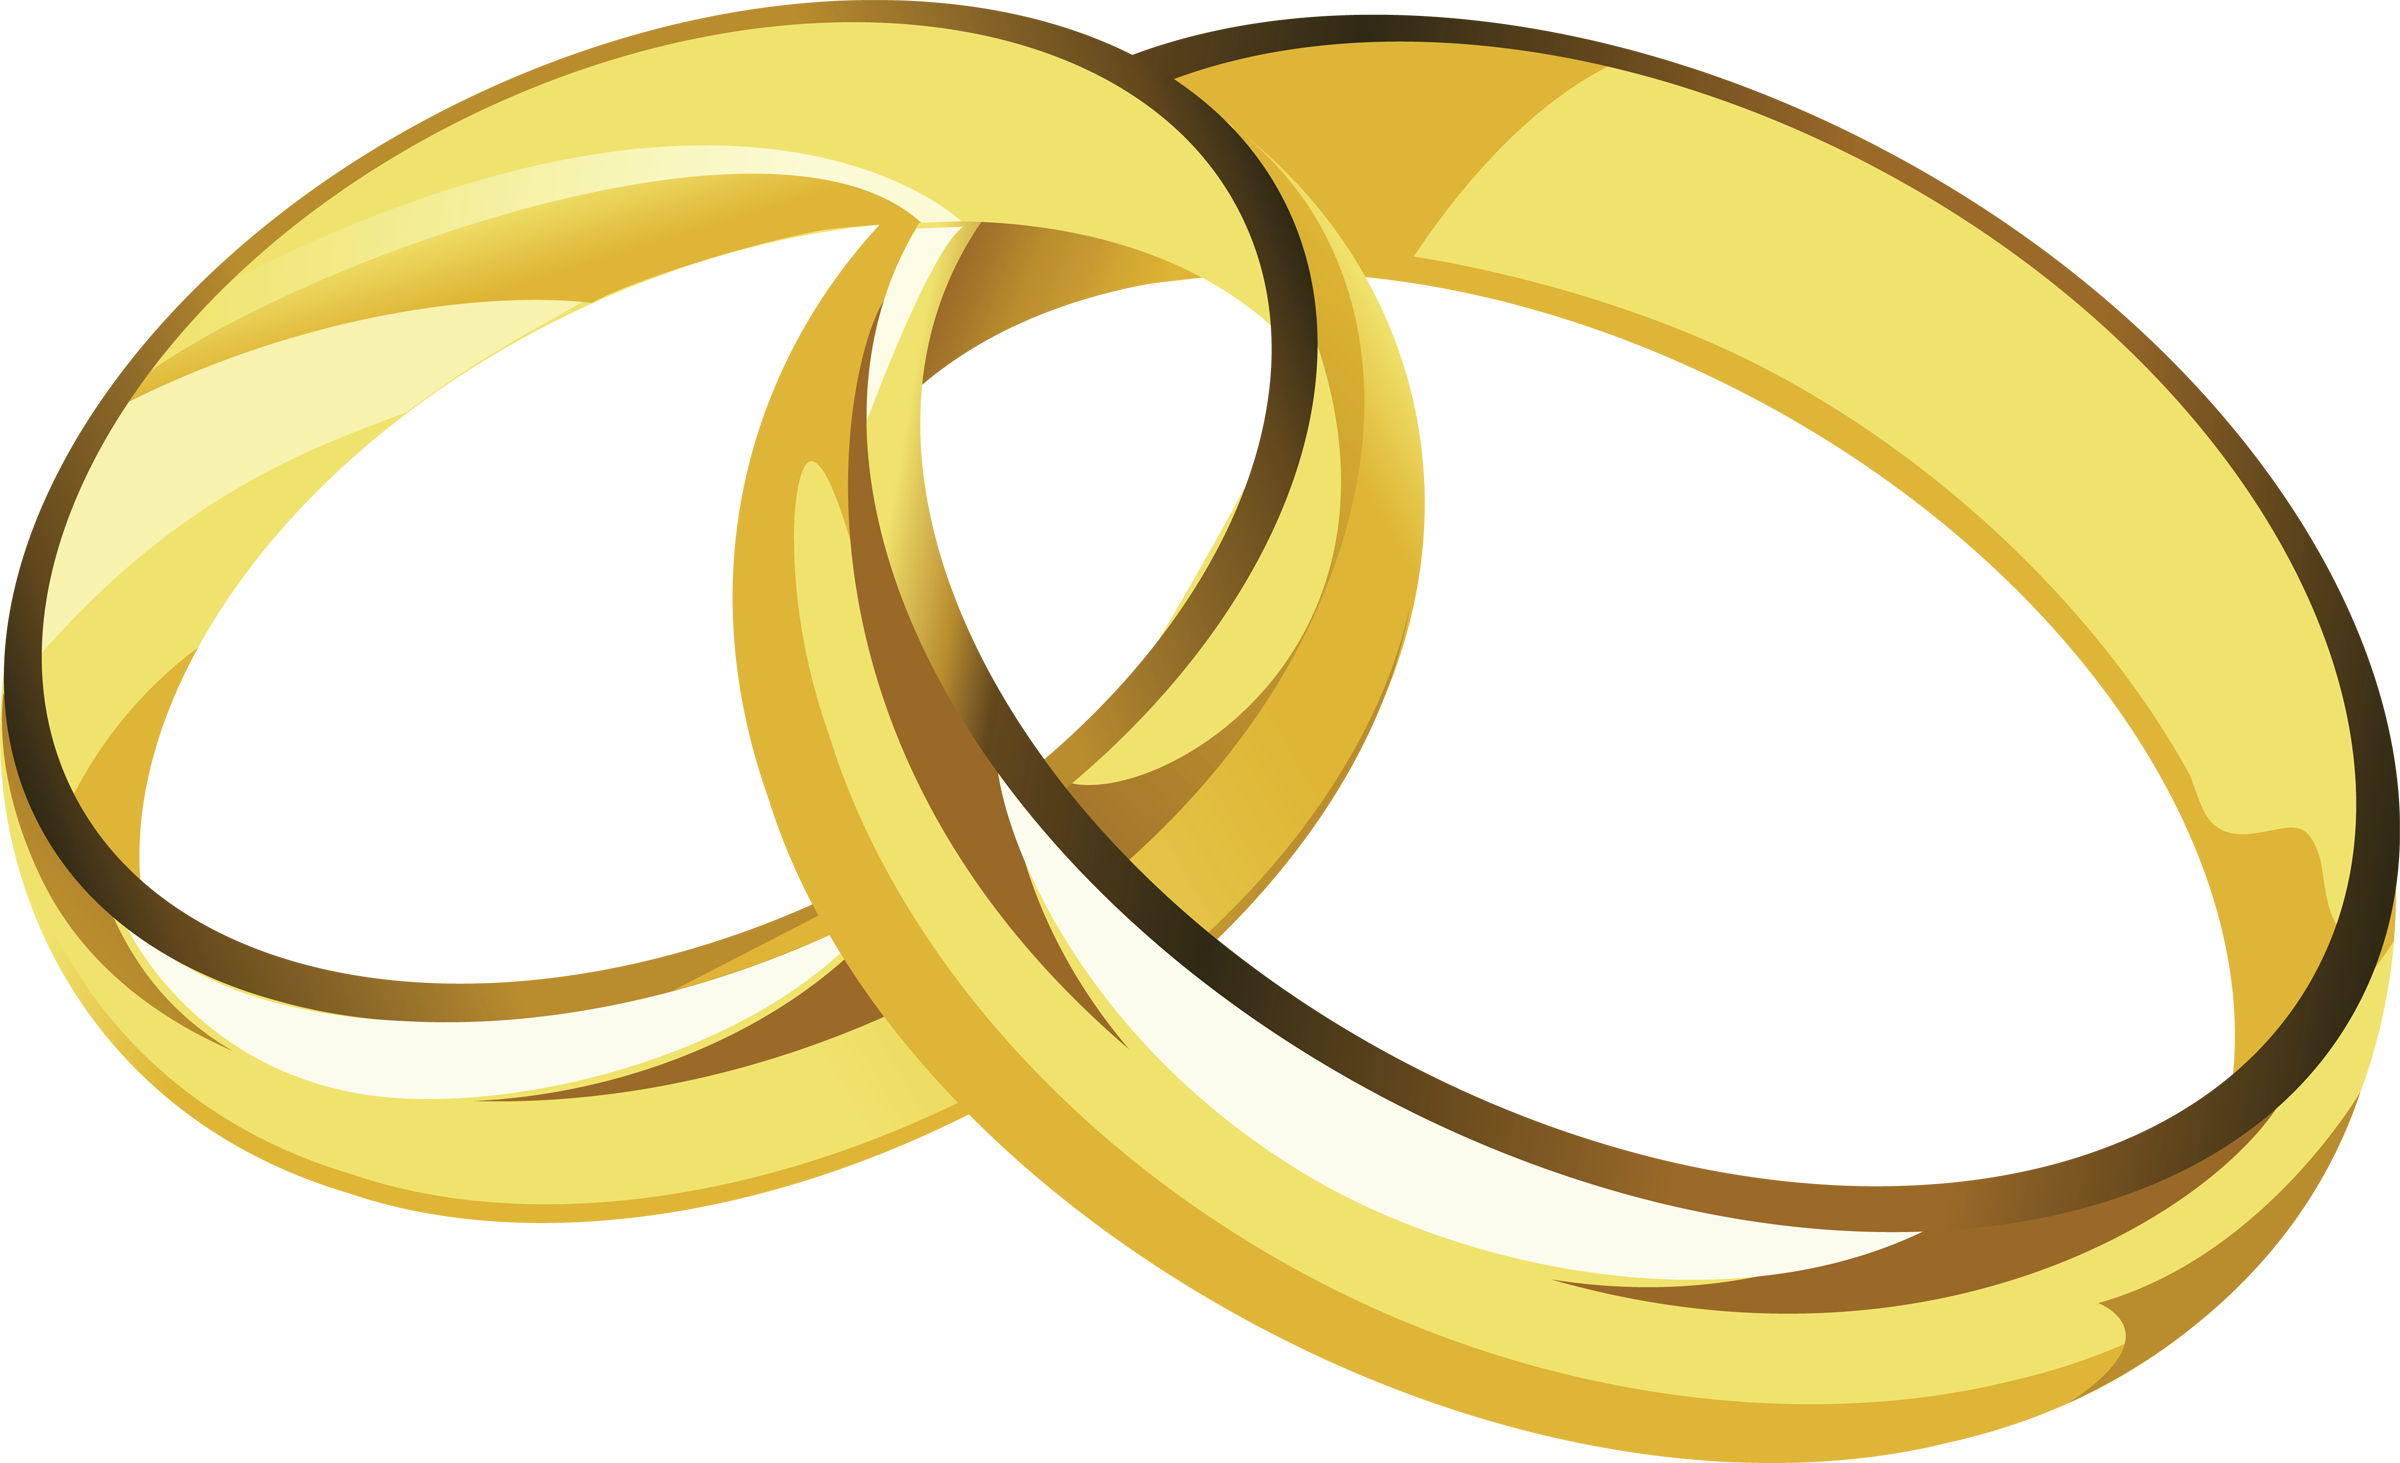 Wedding Rings Clipart - Tumundografico